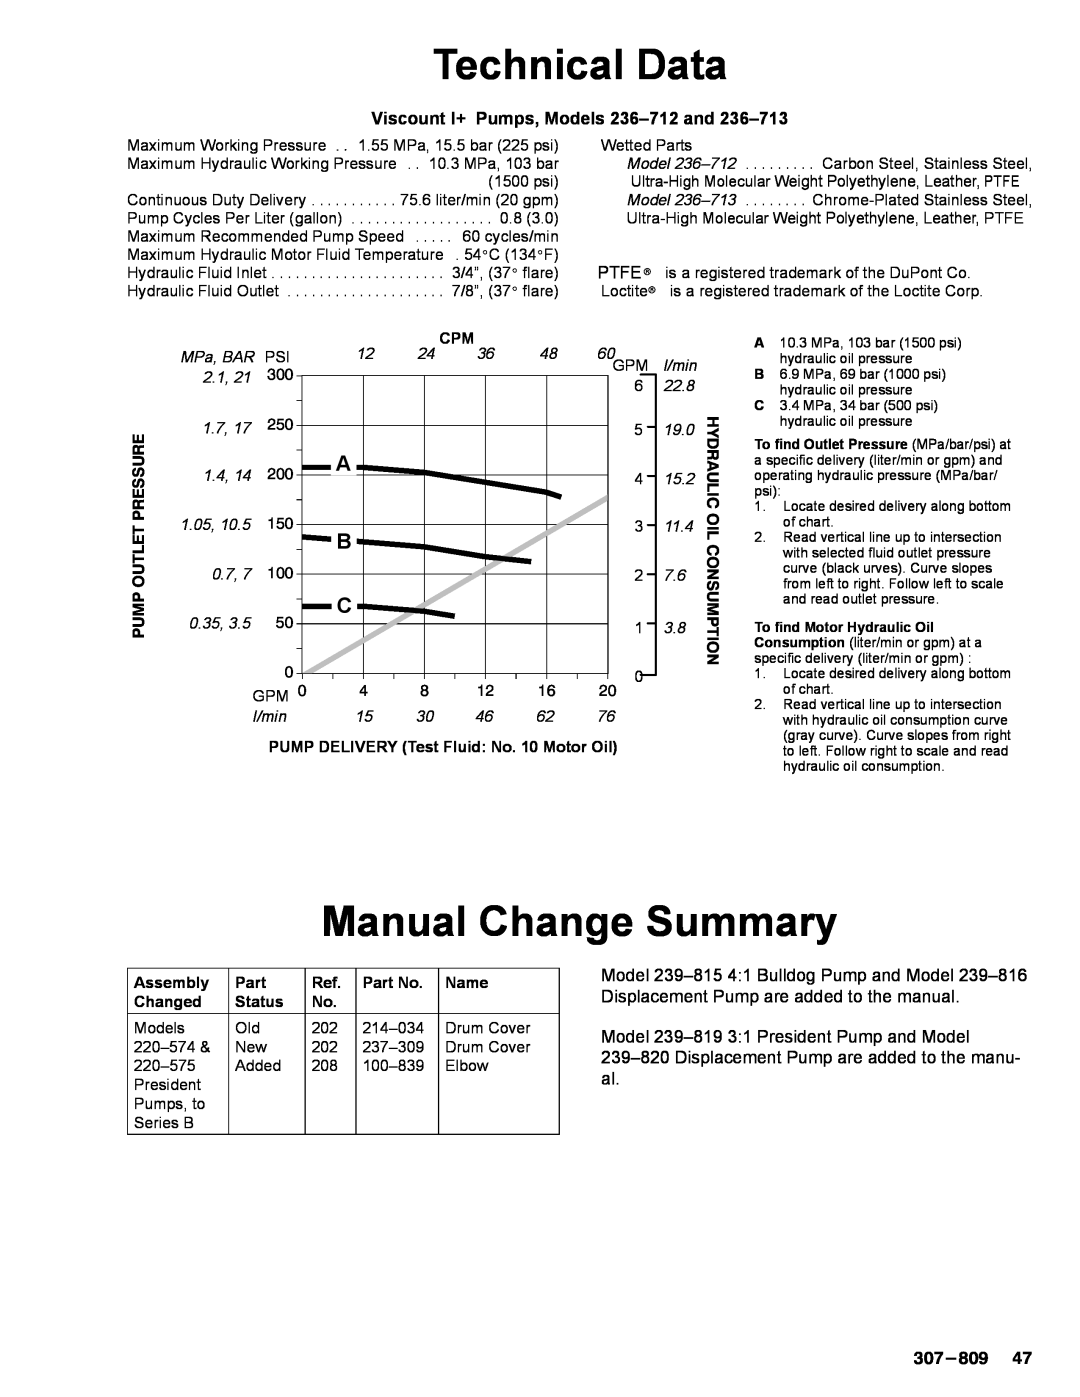 Graco 220-569 manual Manual Change Summary, Viscount I+ Pumps, Models 236-712and, Technical Data 